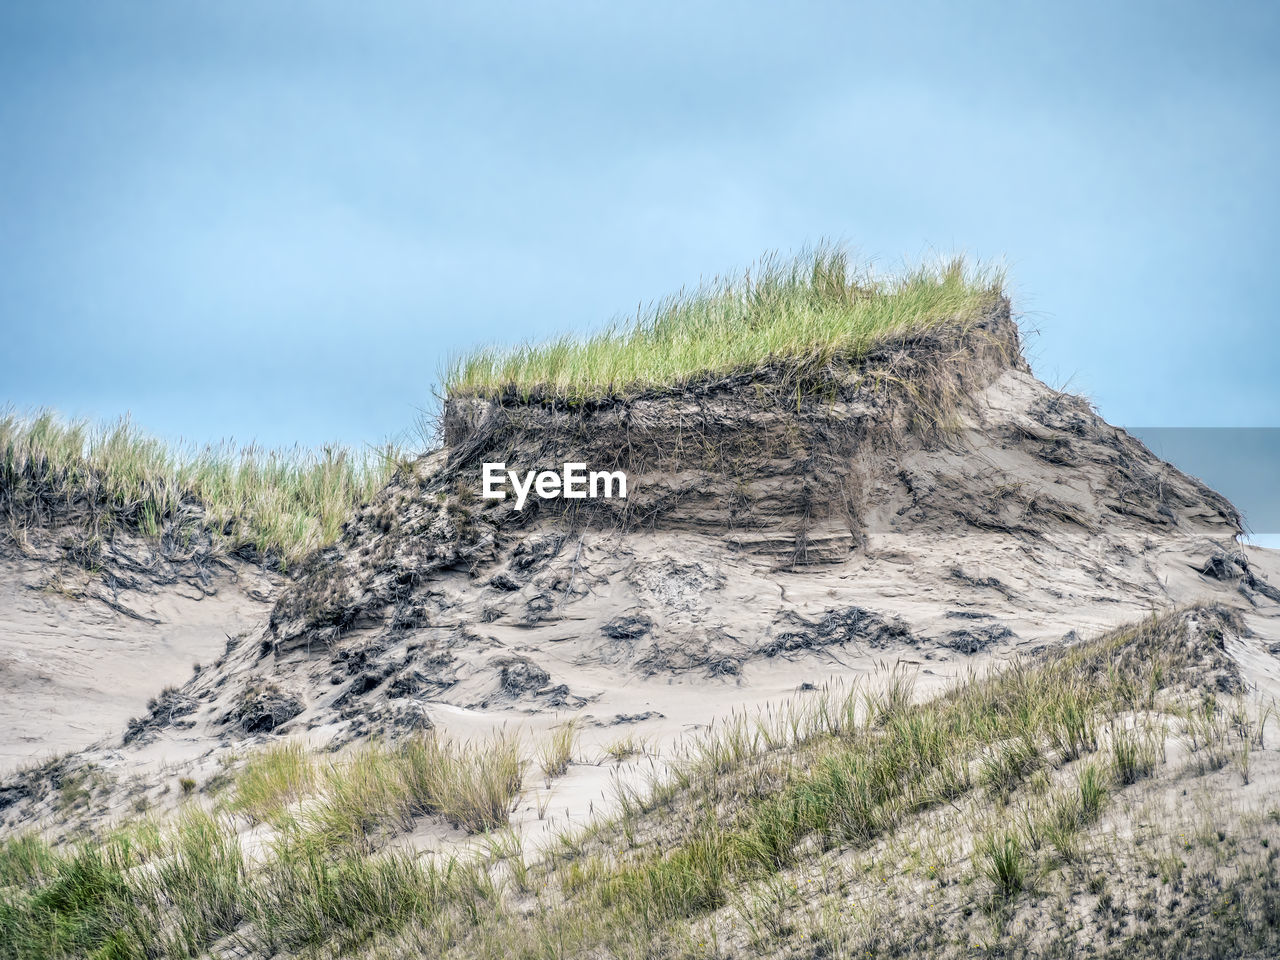 Moving dune wydma czolpinska, slowinski national park, baltic sea, poland